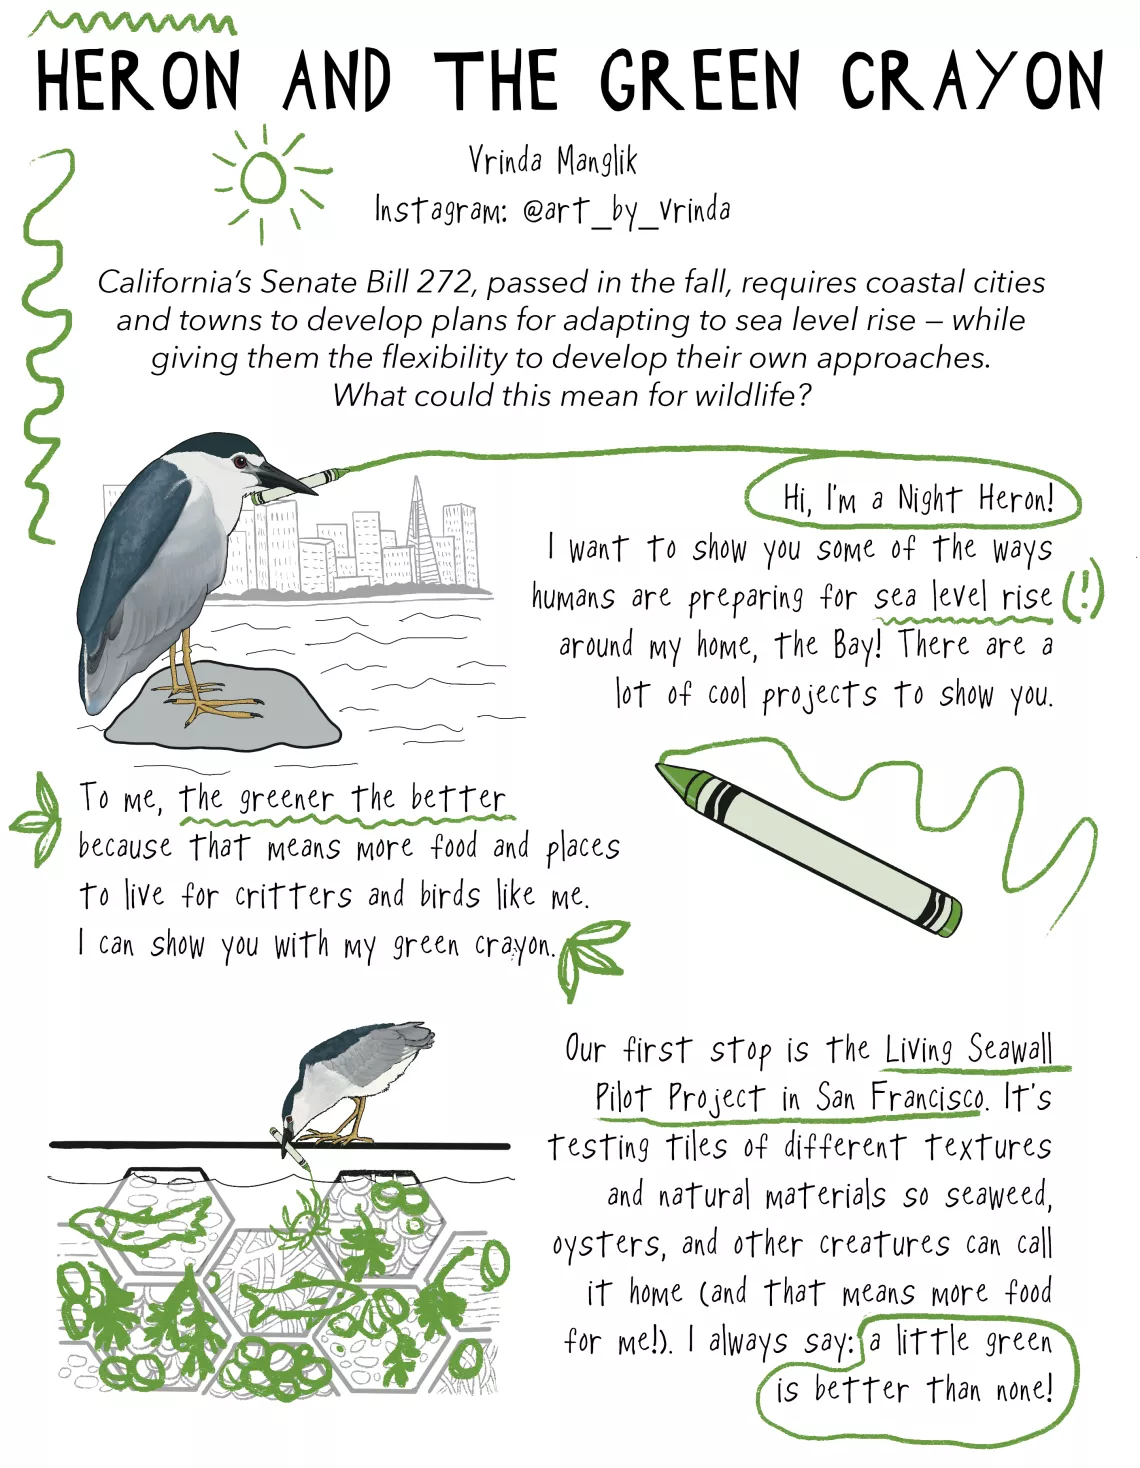 Heron and the Green Crayon illustration